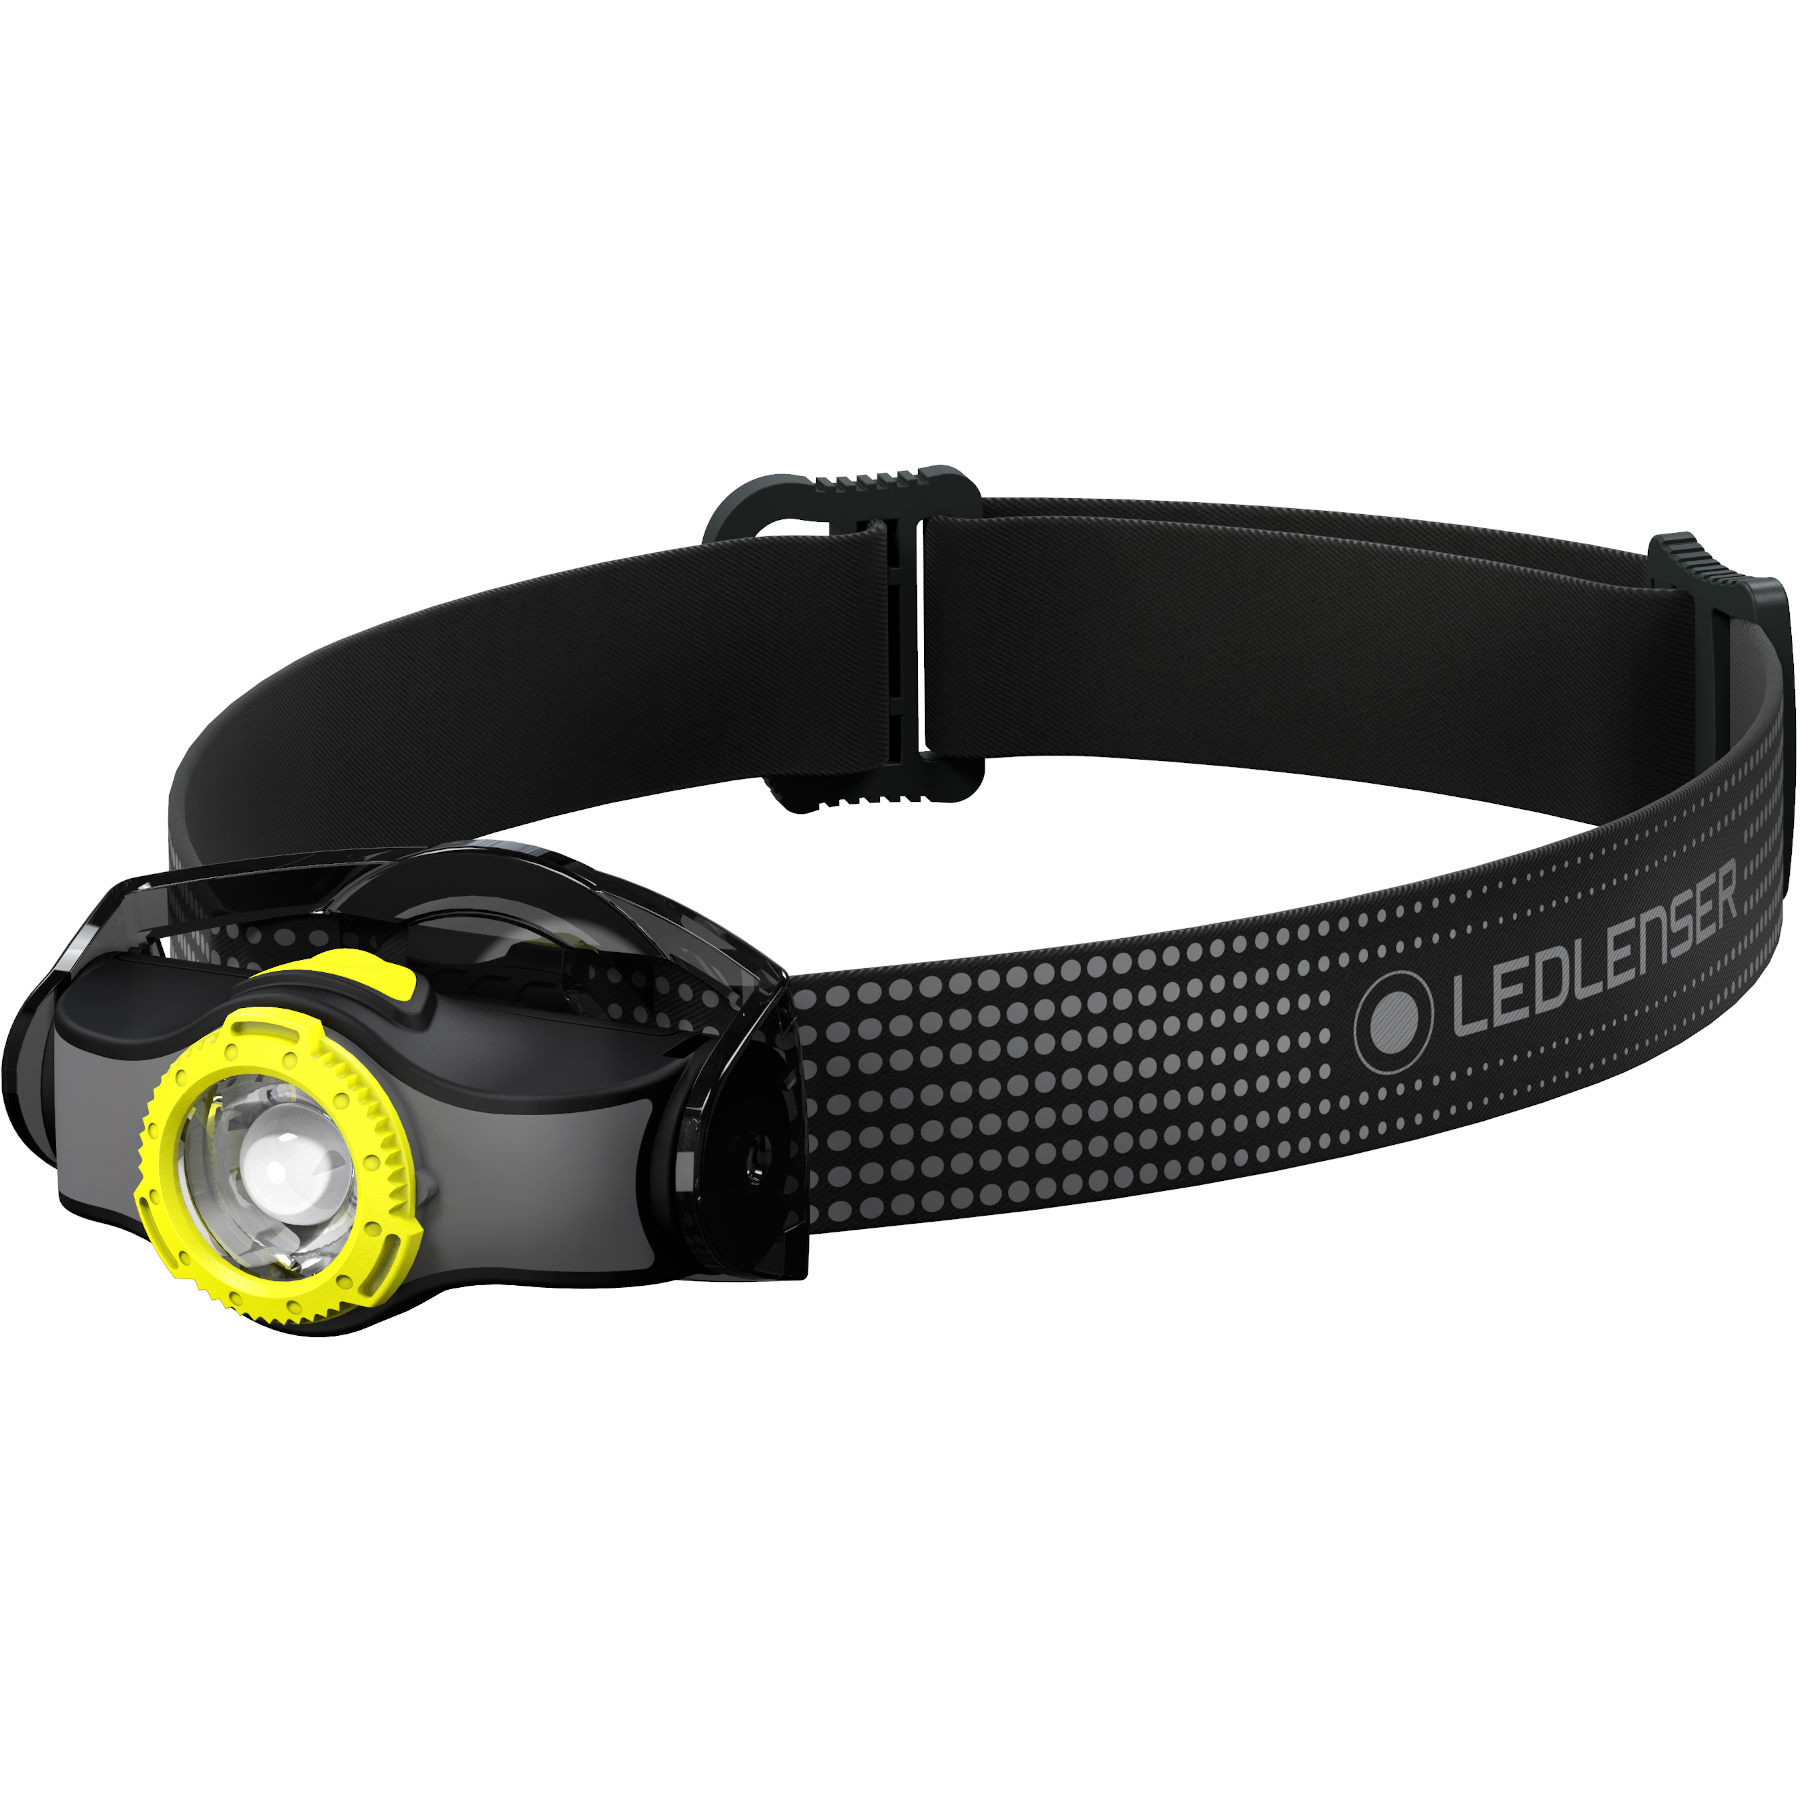 Productfoto van LEDLENSER MH3 Headlamp - Black/Yellow